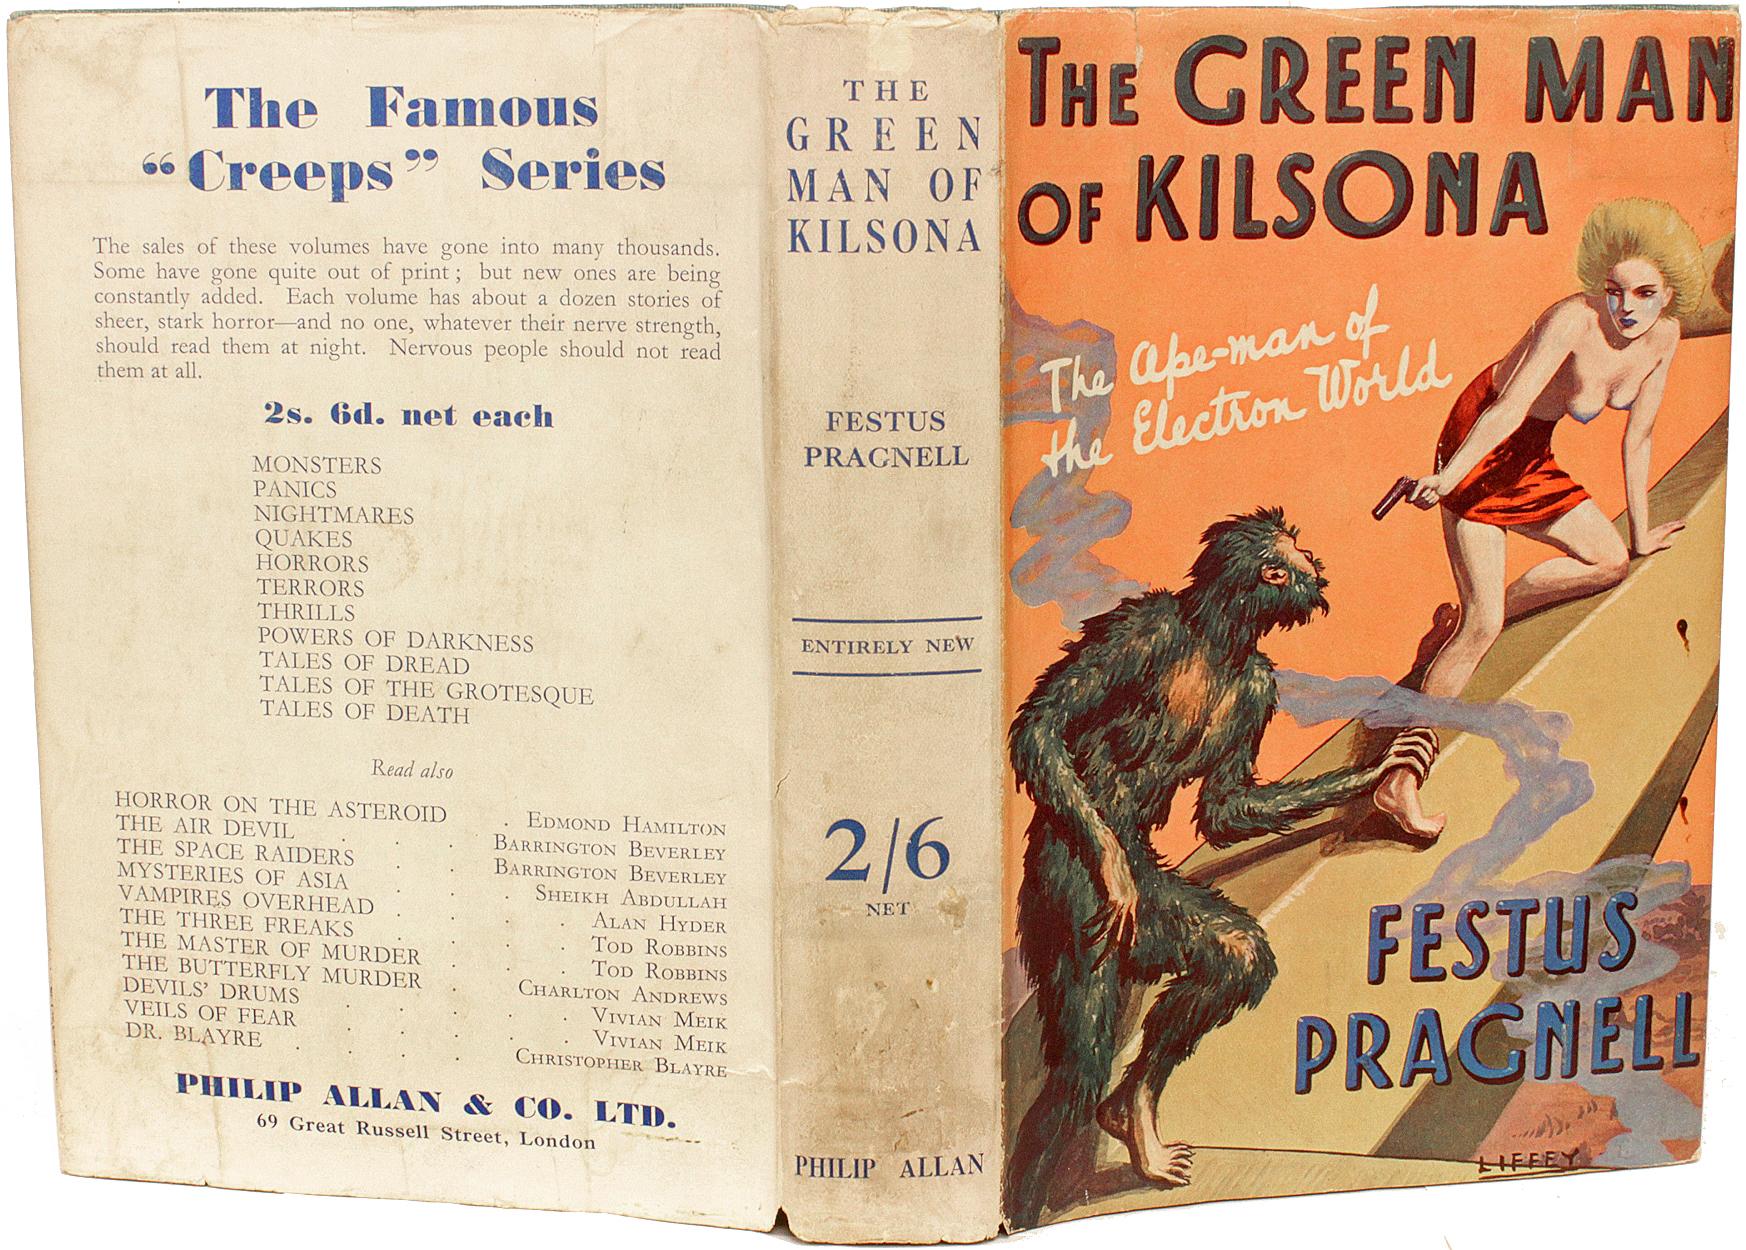 Festus Pragnell, the Green Man of Kilsona, First Edition Presentation Copy, 1936 For Sale 3